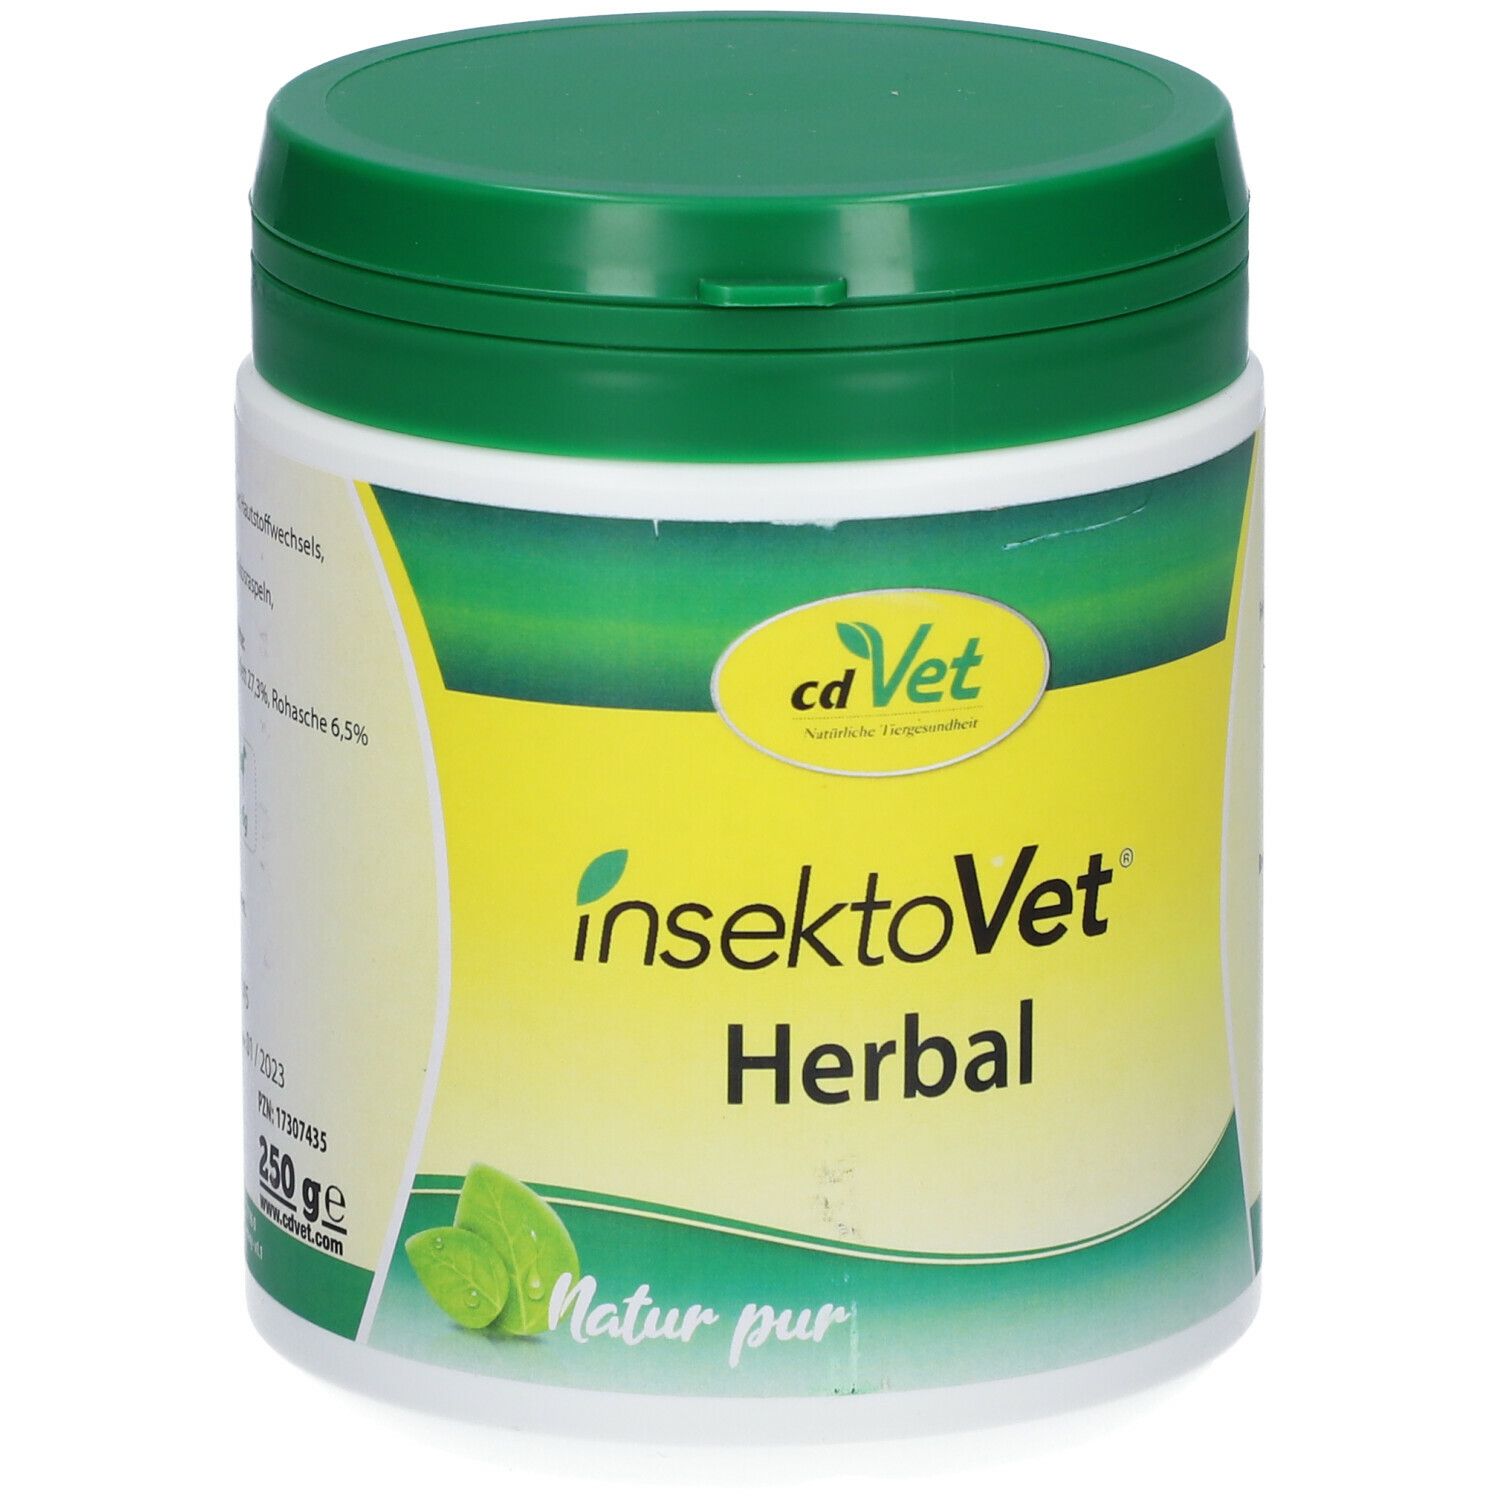 cdVet insektoVet® Herbal